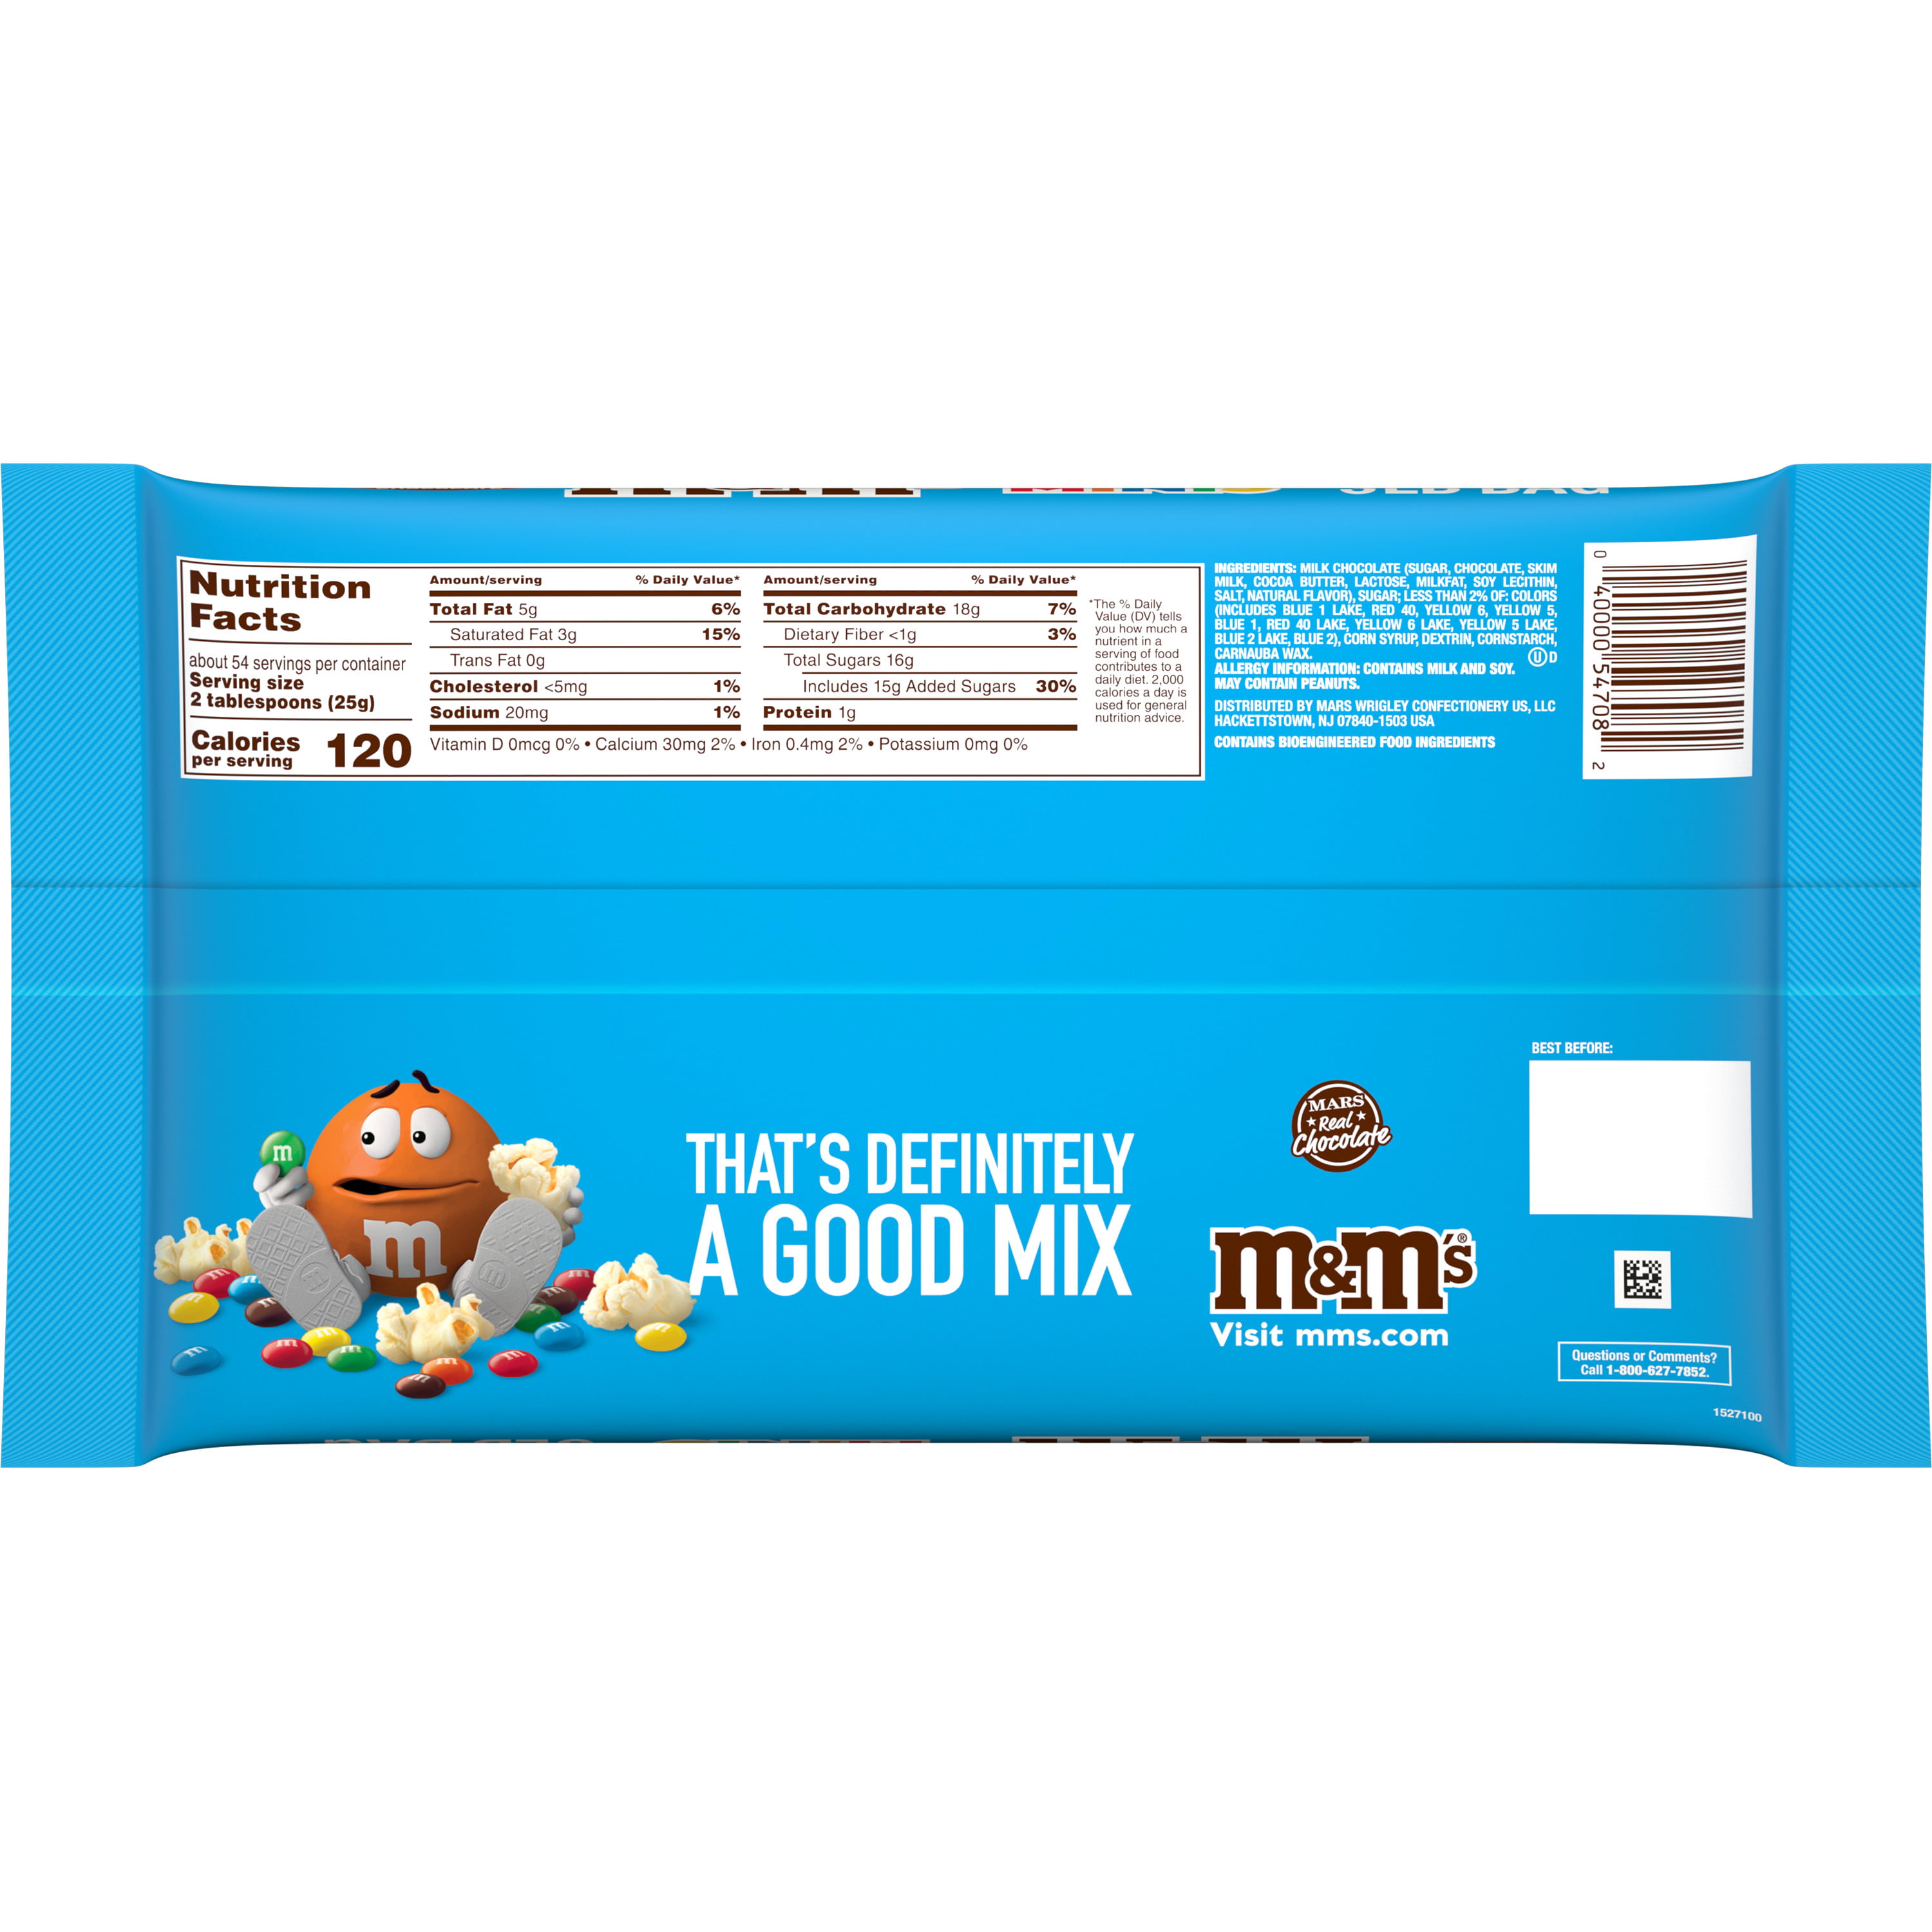 M&M's Peanut Chocolate Candies 3 lb. Bulk Bag